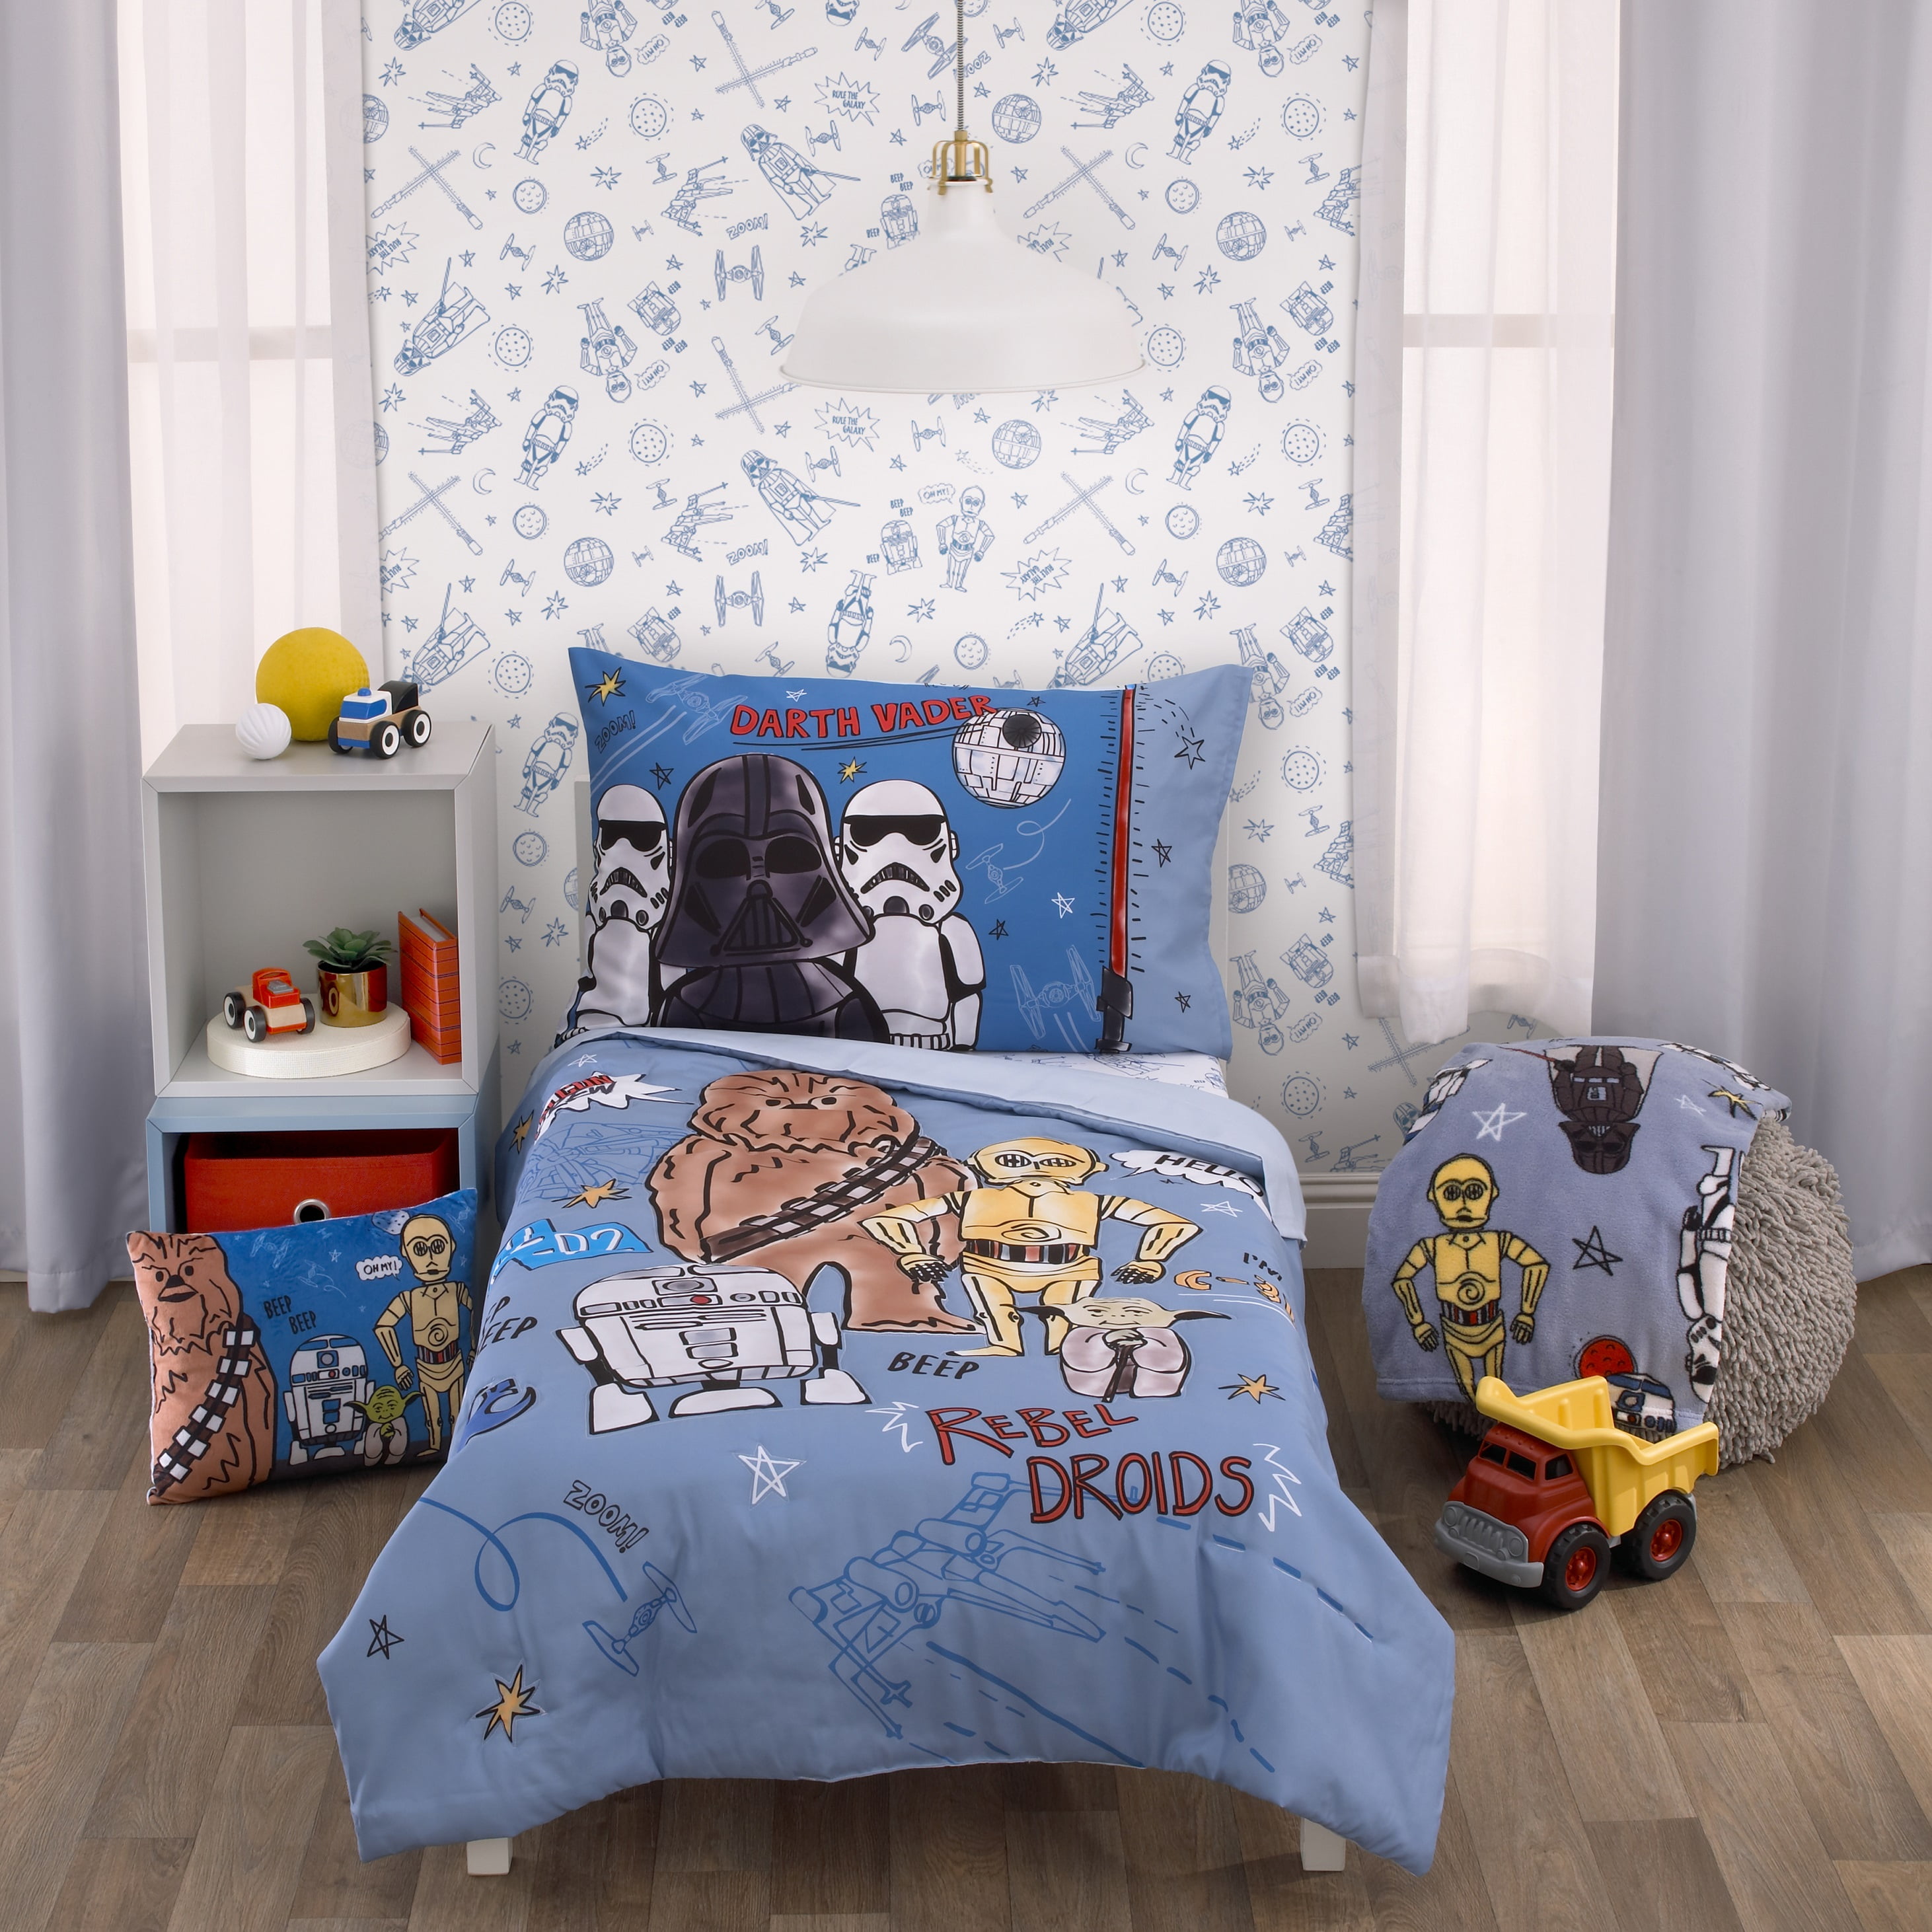 Kids Space Galaxy Blue Duvet Cover Pillowcase Bedding Set Single/Cot Bed/Curtain 